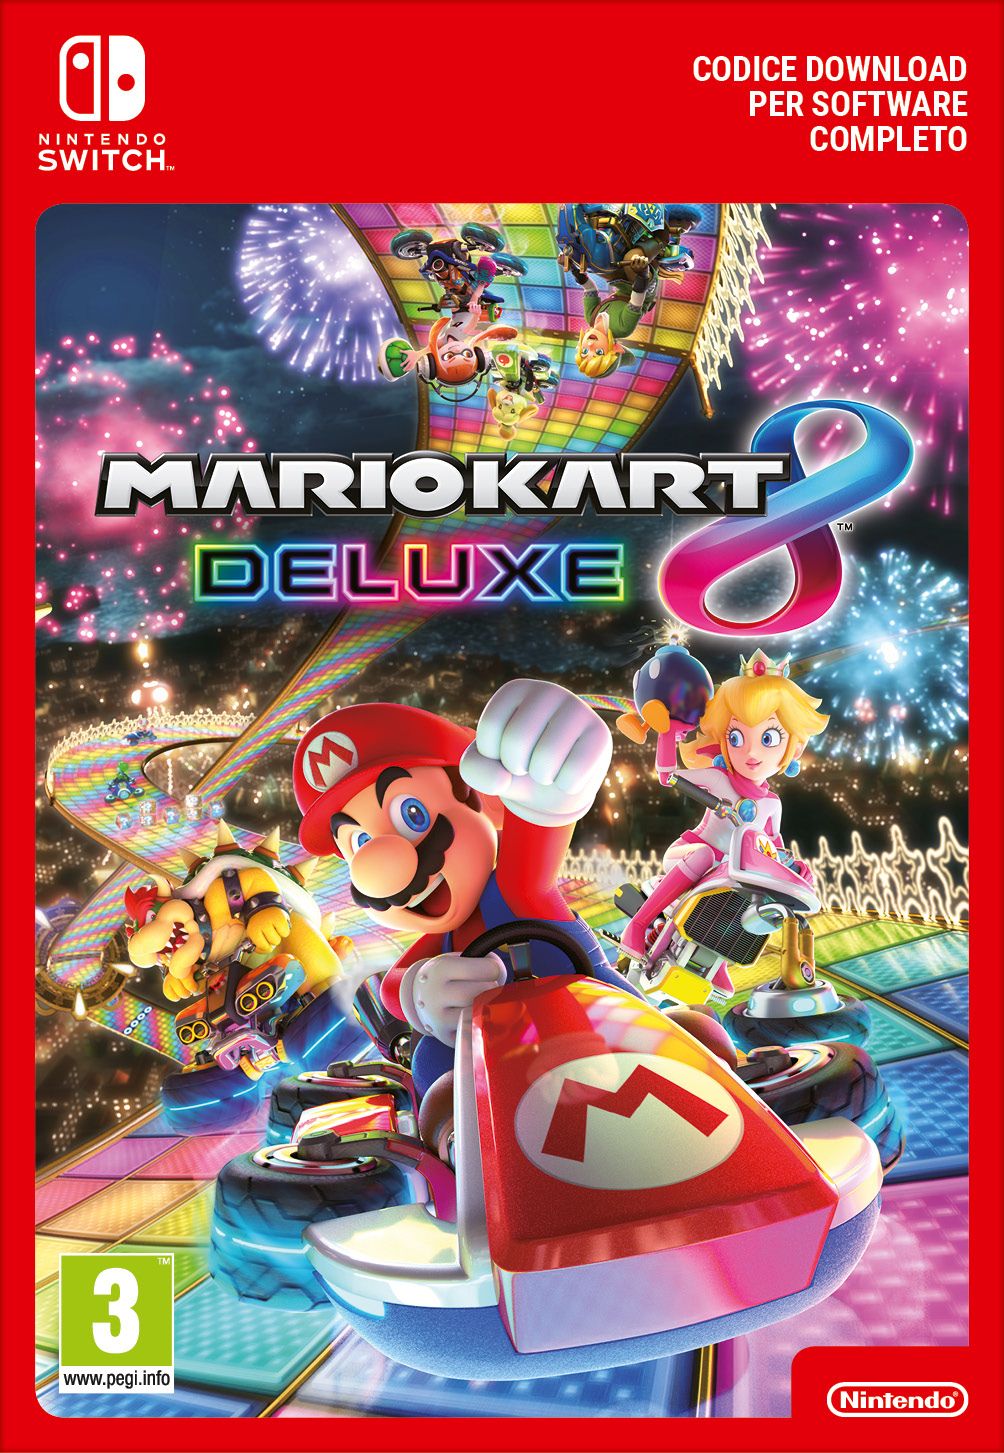 SW MKARTD 8 3M - Consola Nintendo Switch Rojo/Azul + Cdigo Juego Mario Kart Deluxe 8 + 3 Meses Suscripcin Nintendo Online